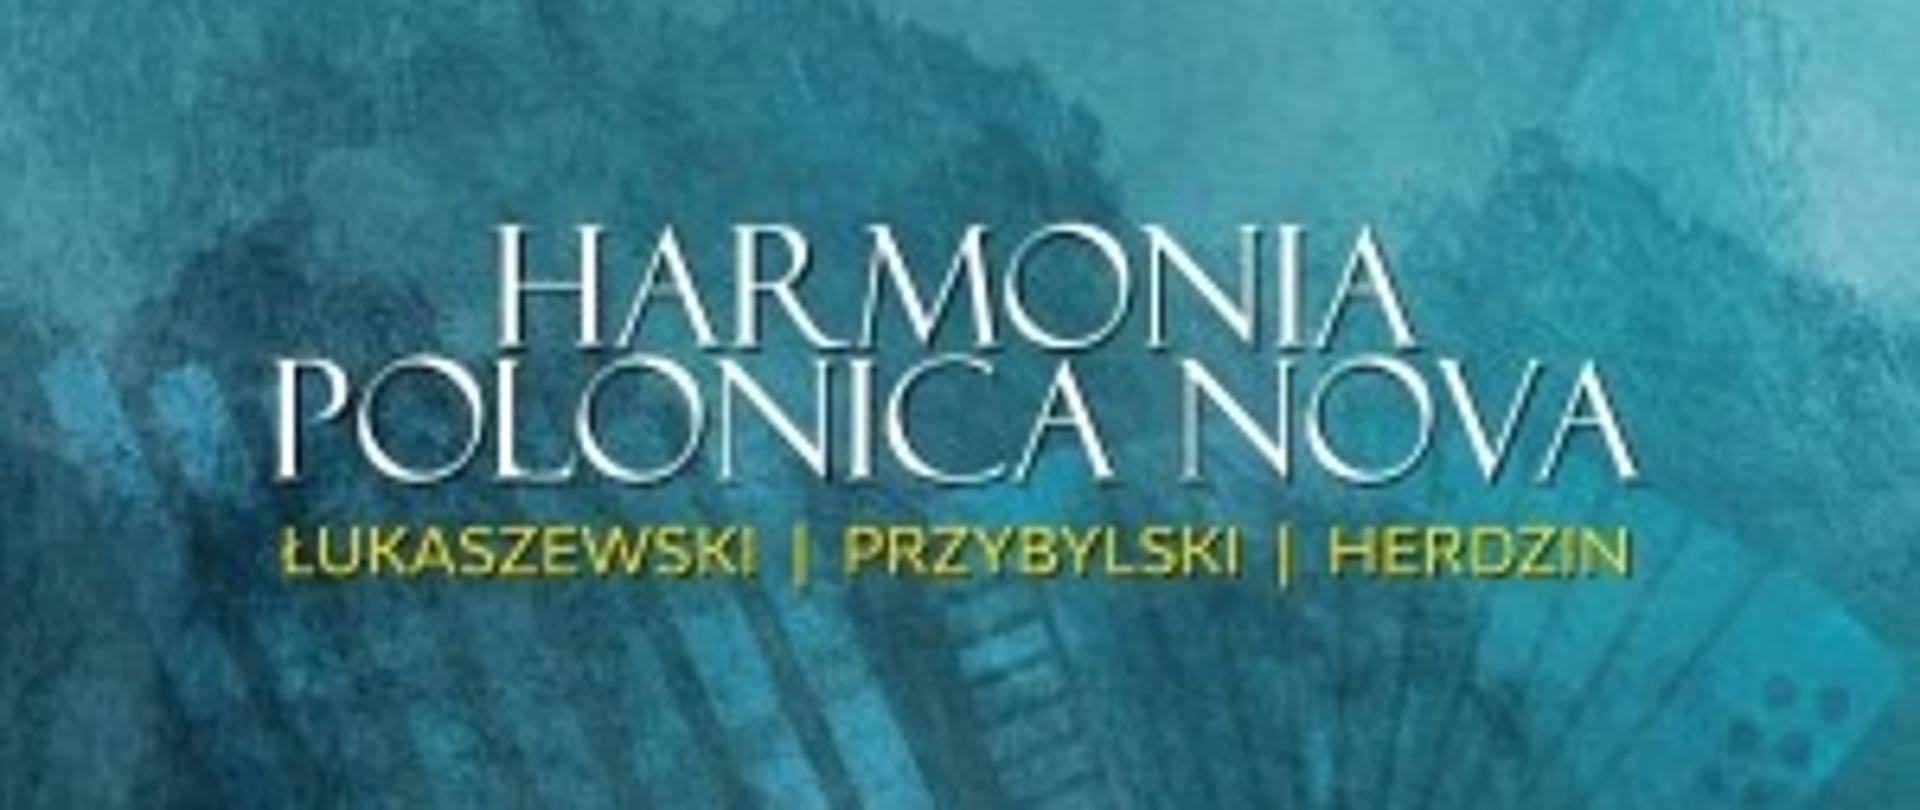 Harmonia Polonica nova